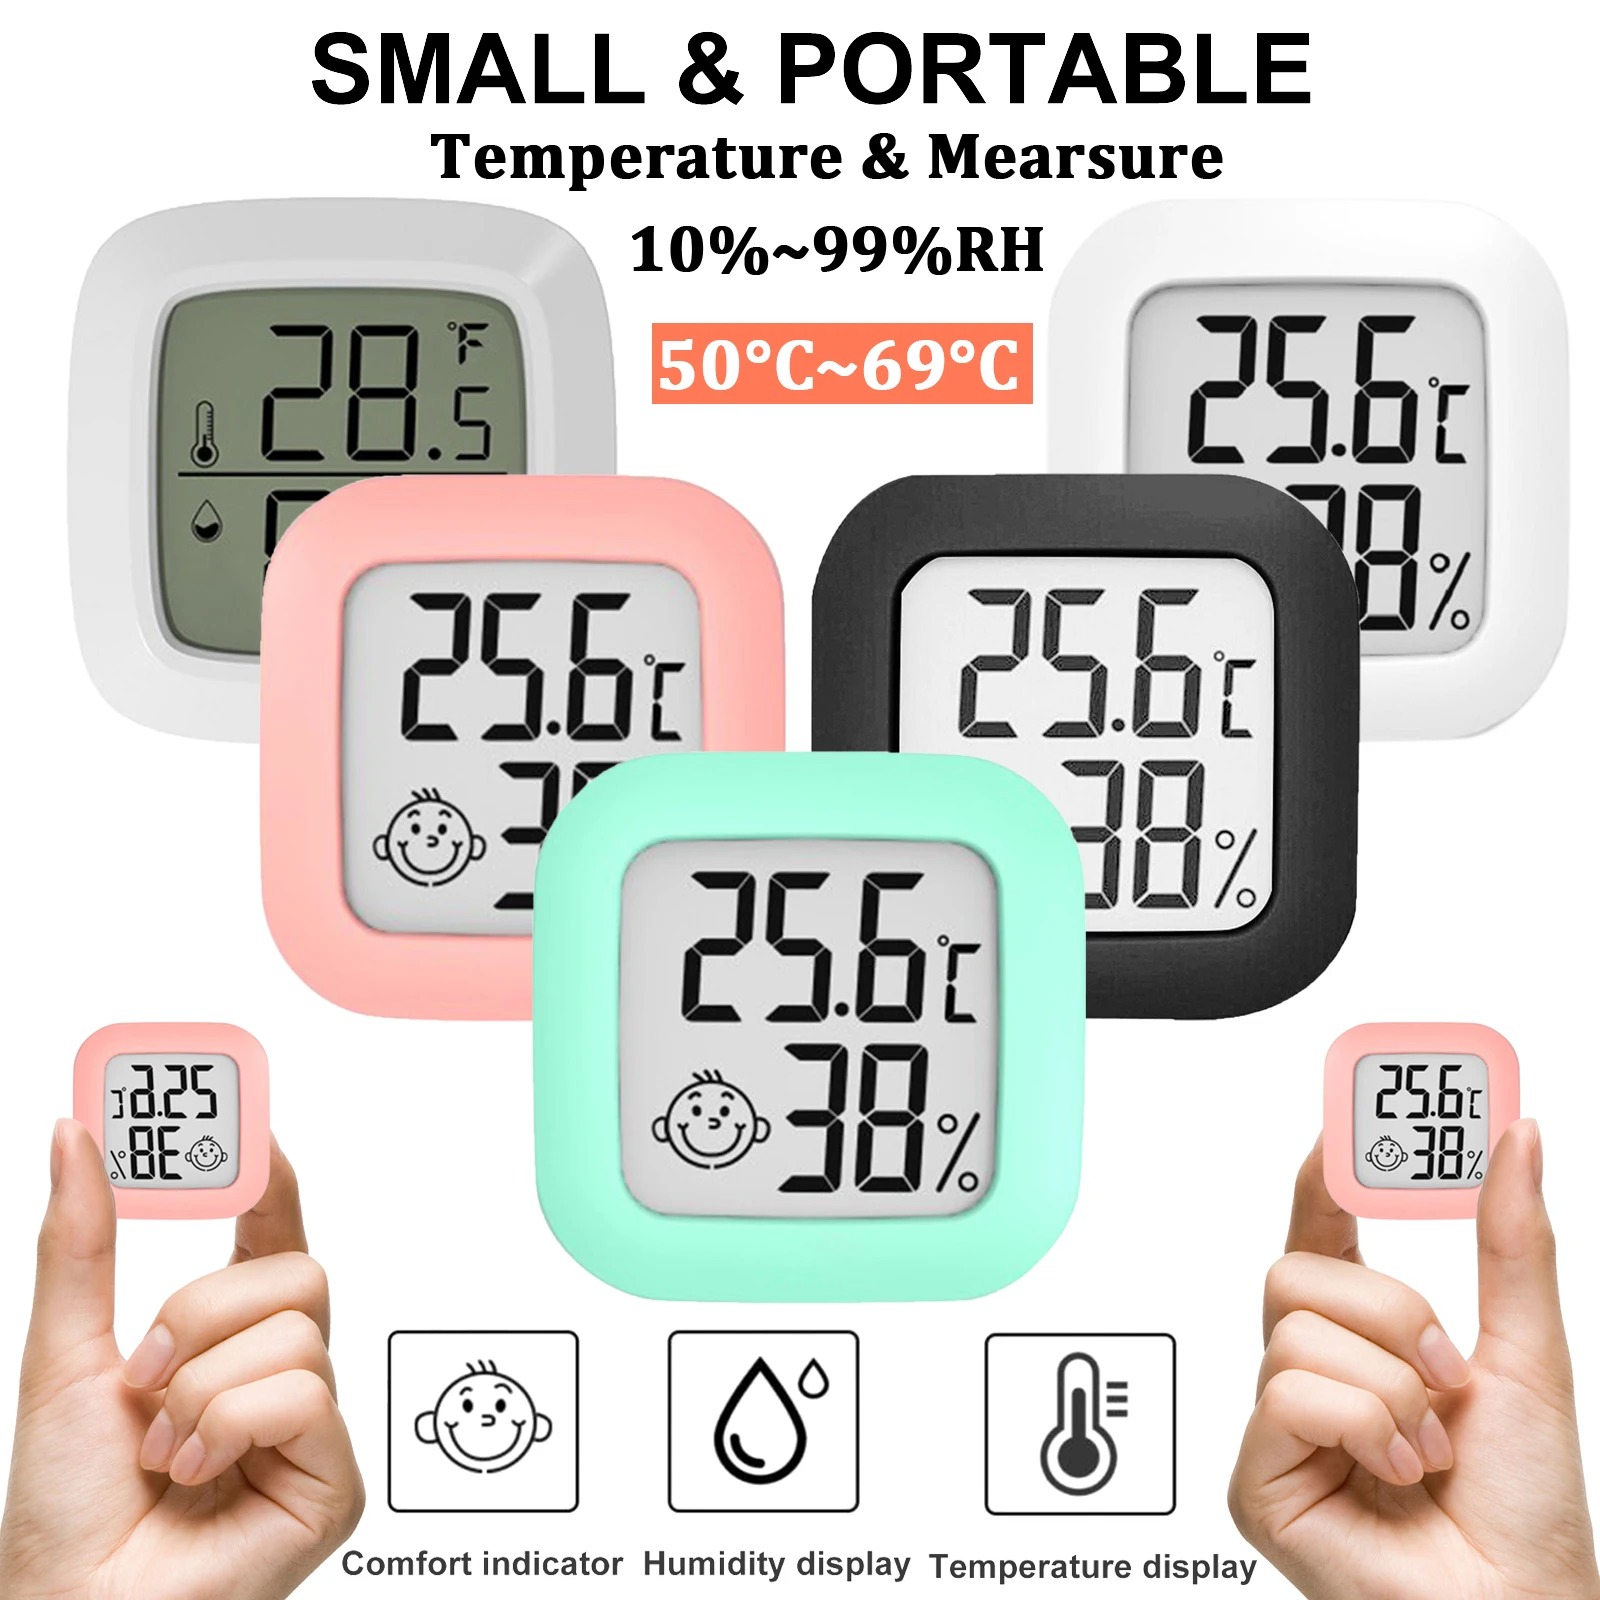 Mini Thermometer LCD Digital Temperature Room Hygrometer Gauge Sensor Humidity Meter Indoor Thermometer Temperature 50°C - 69°C